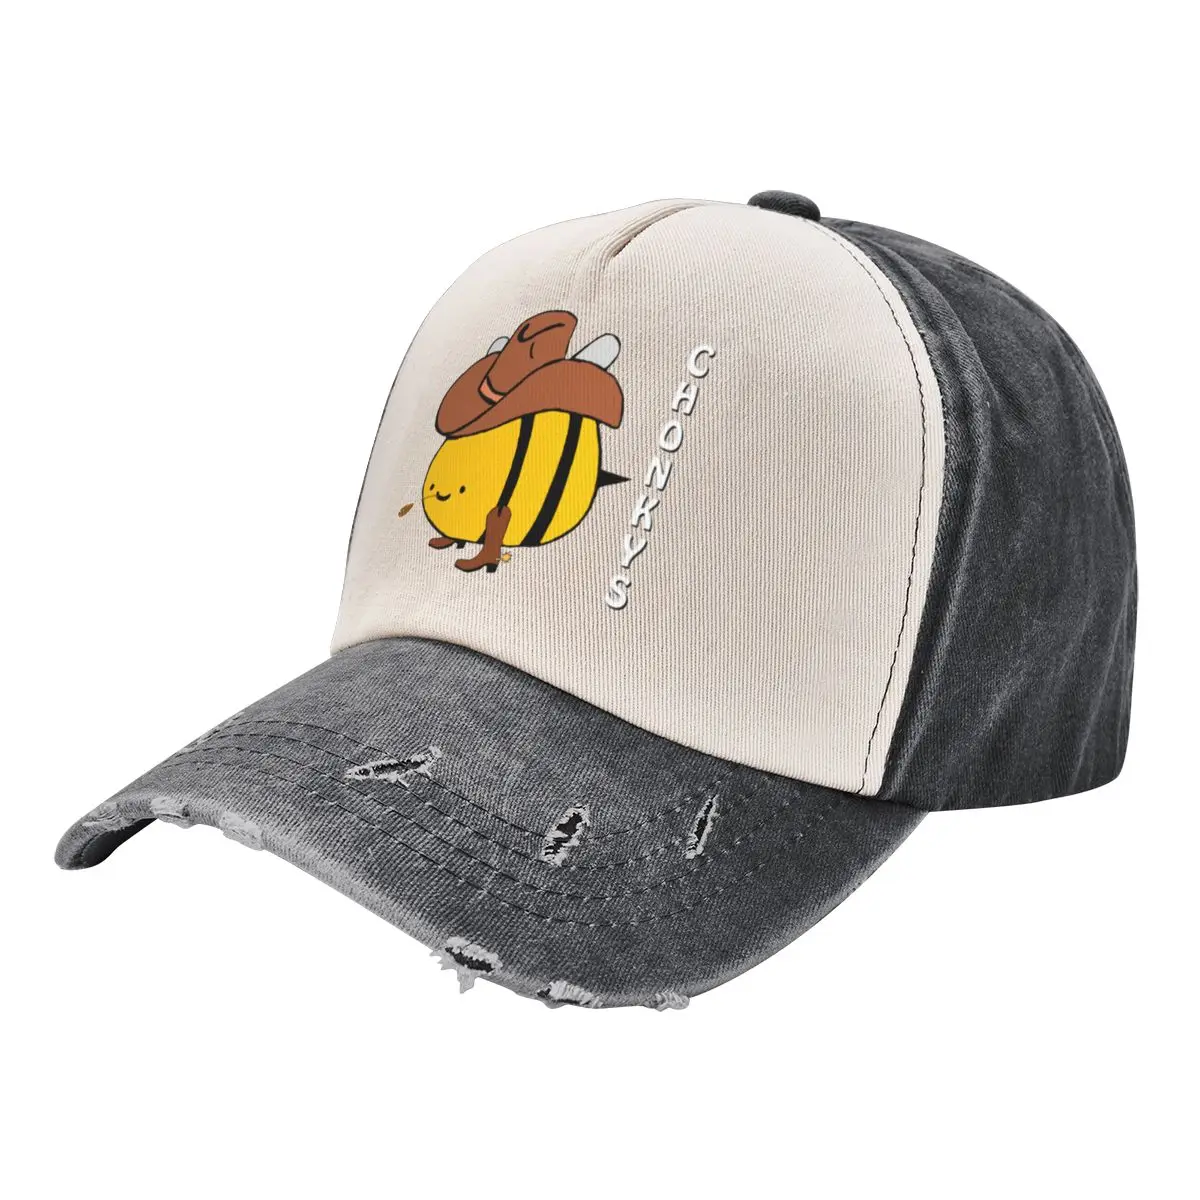 

Cowboy Bee Baseball Cap Military Tactical Cap Big Size Hat derby hat cute Golf Wear Men Women's